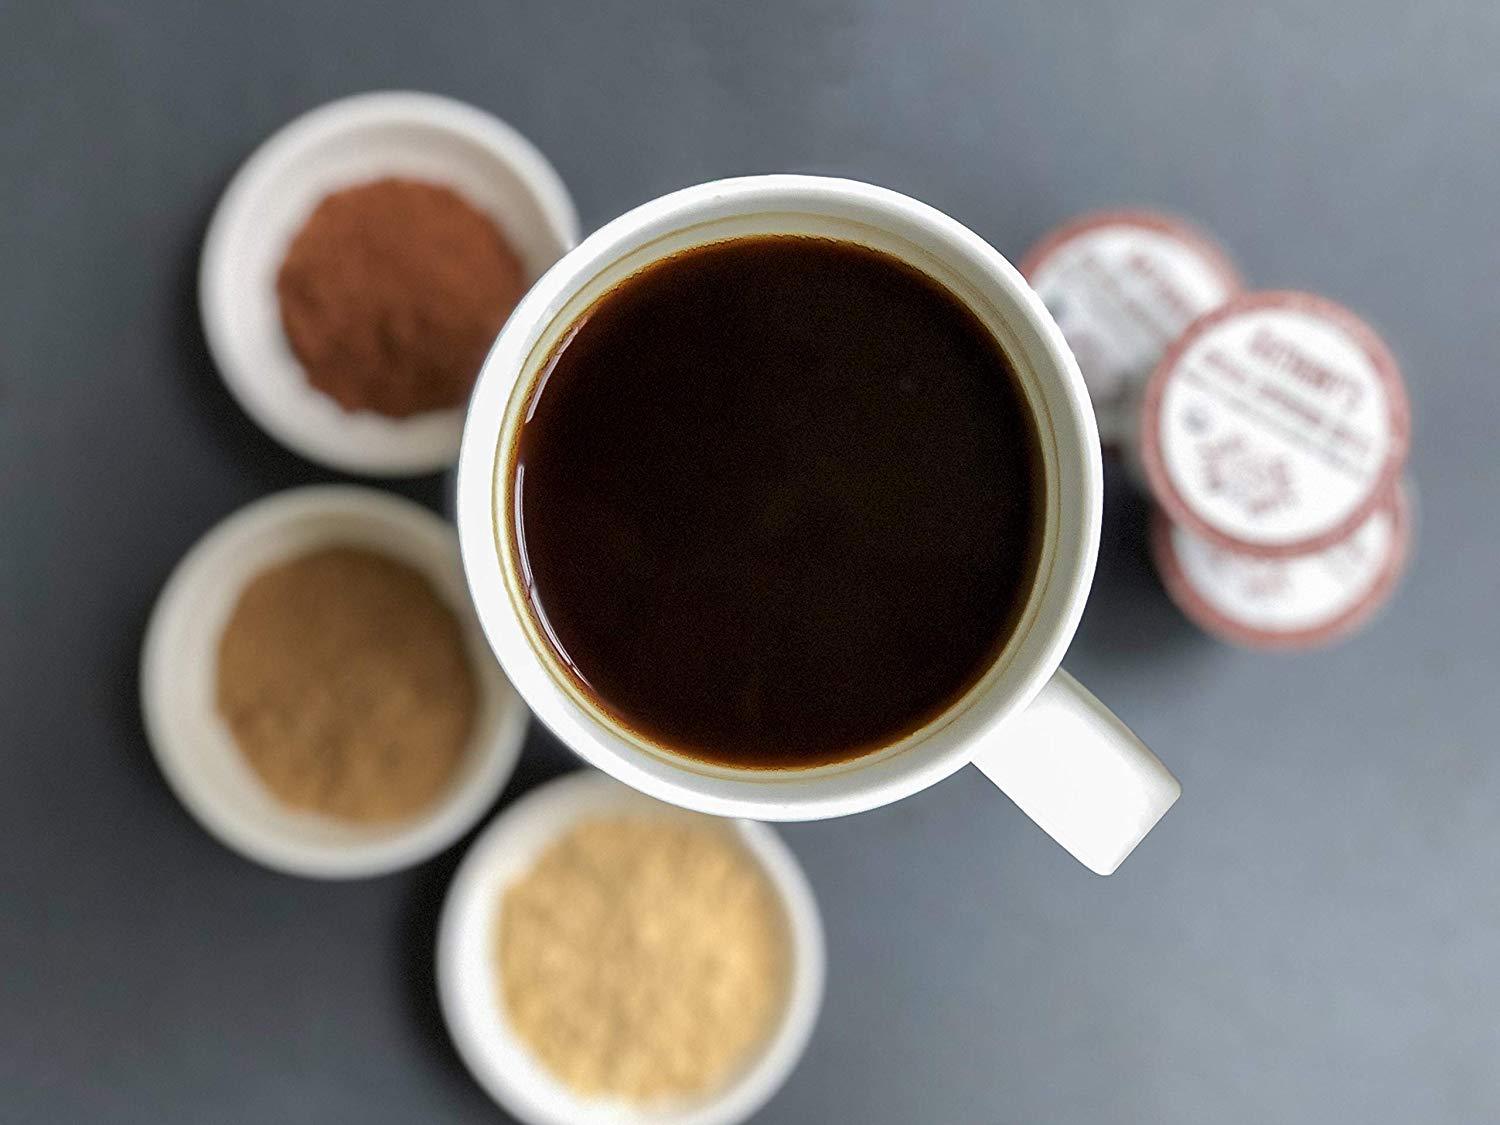 Organic Superfood Coffee Pods: Peruvian Superfood Blend infused with Organic Black Maca, Cacao Powder & Camu Camu